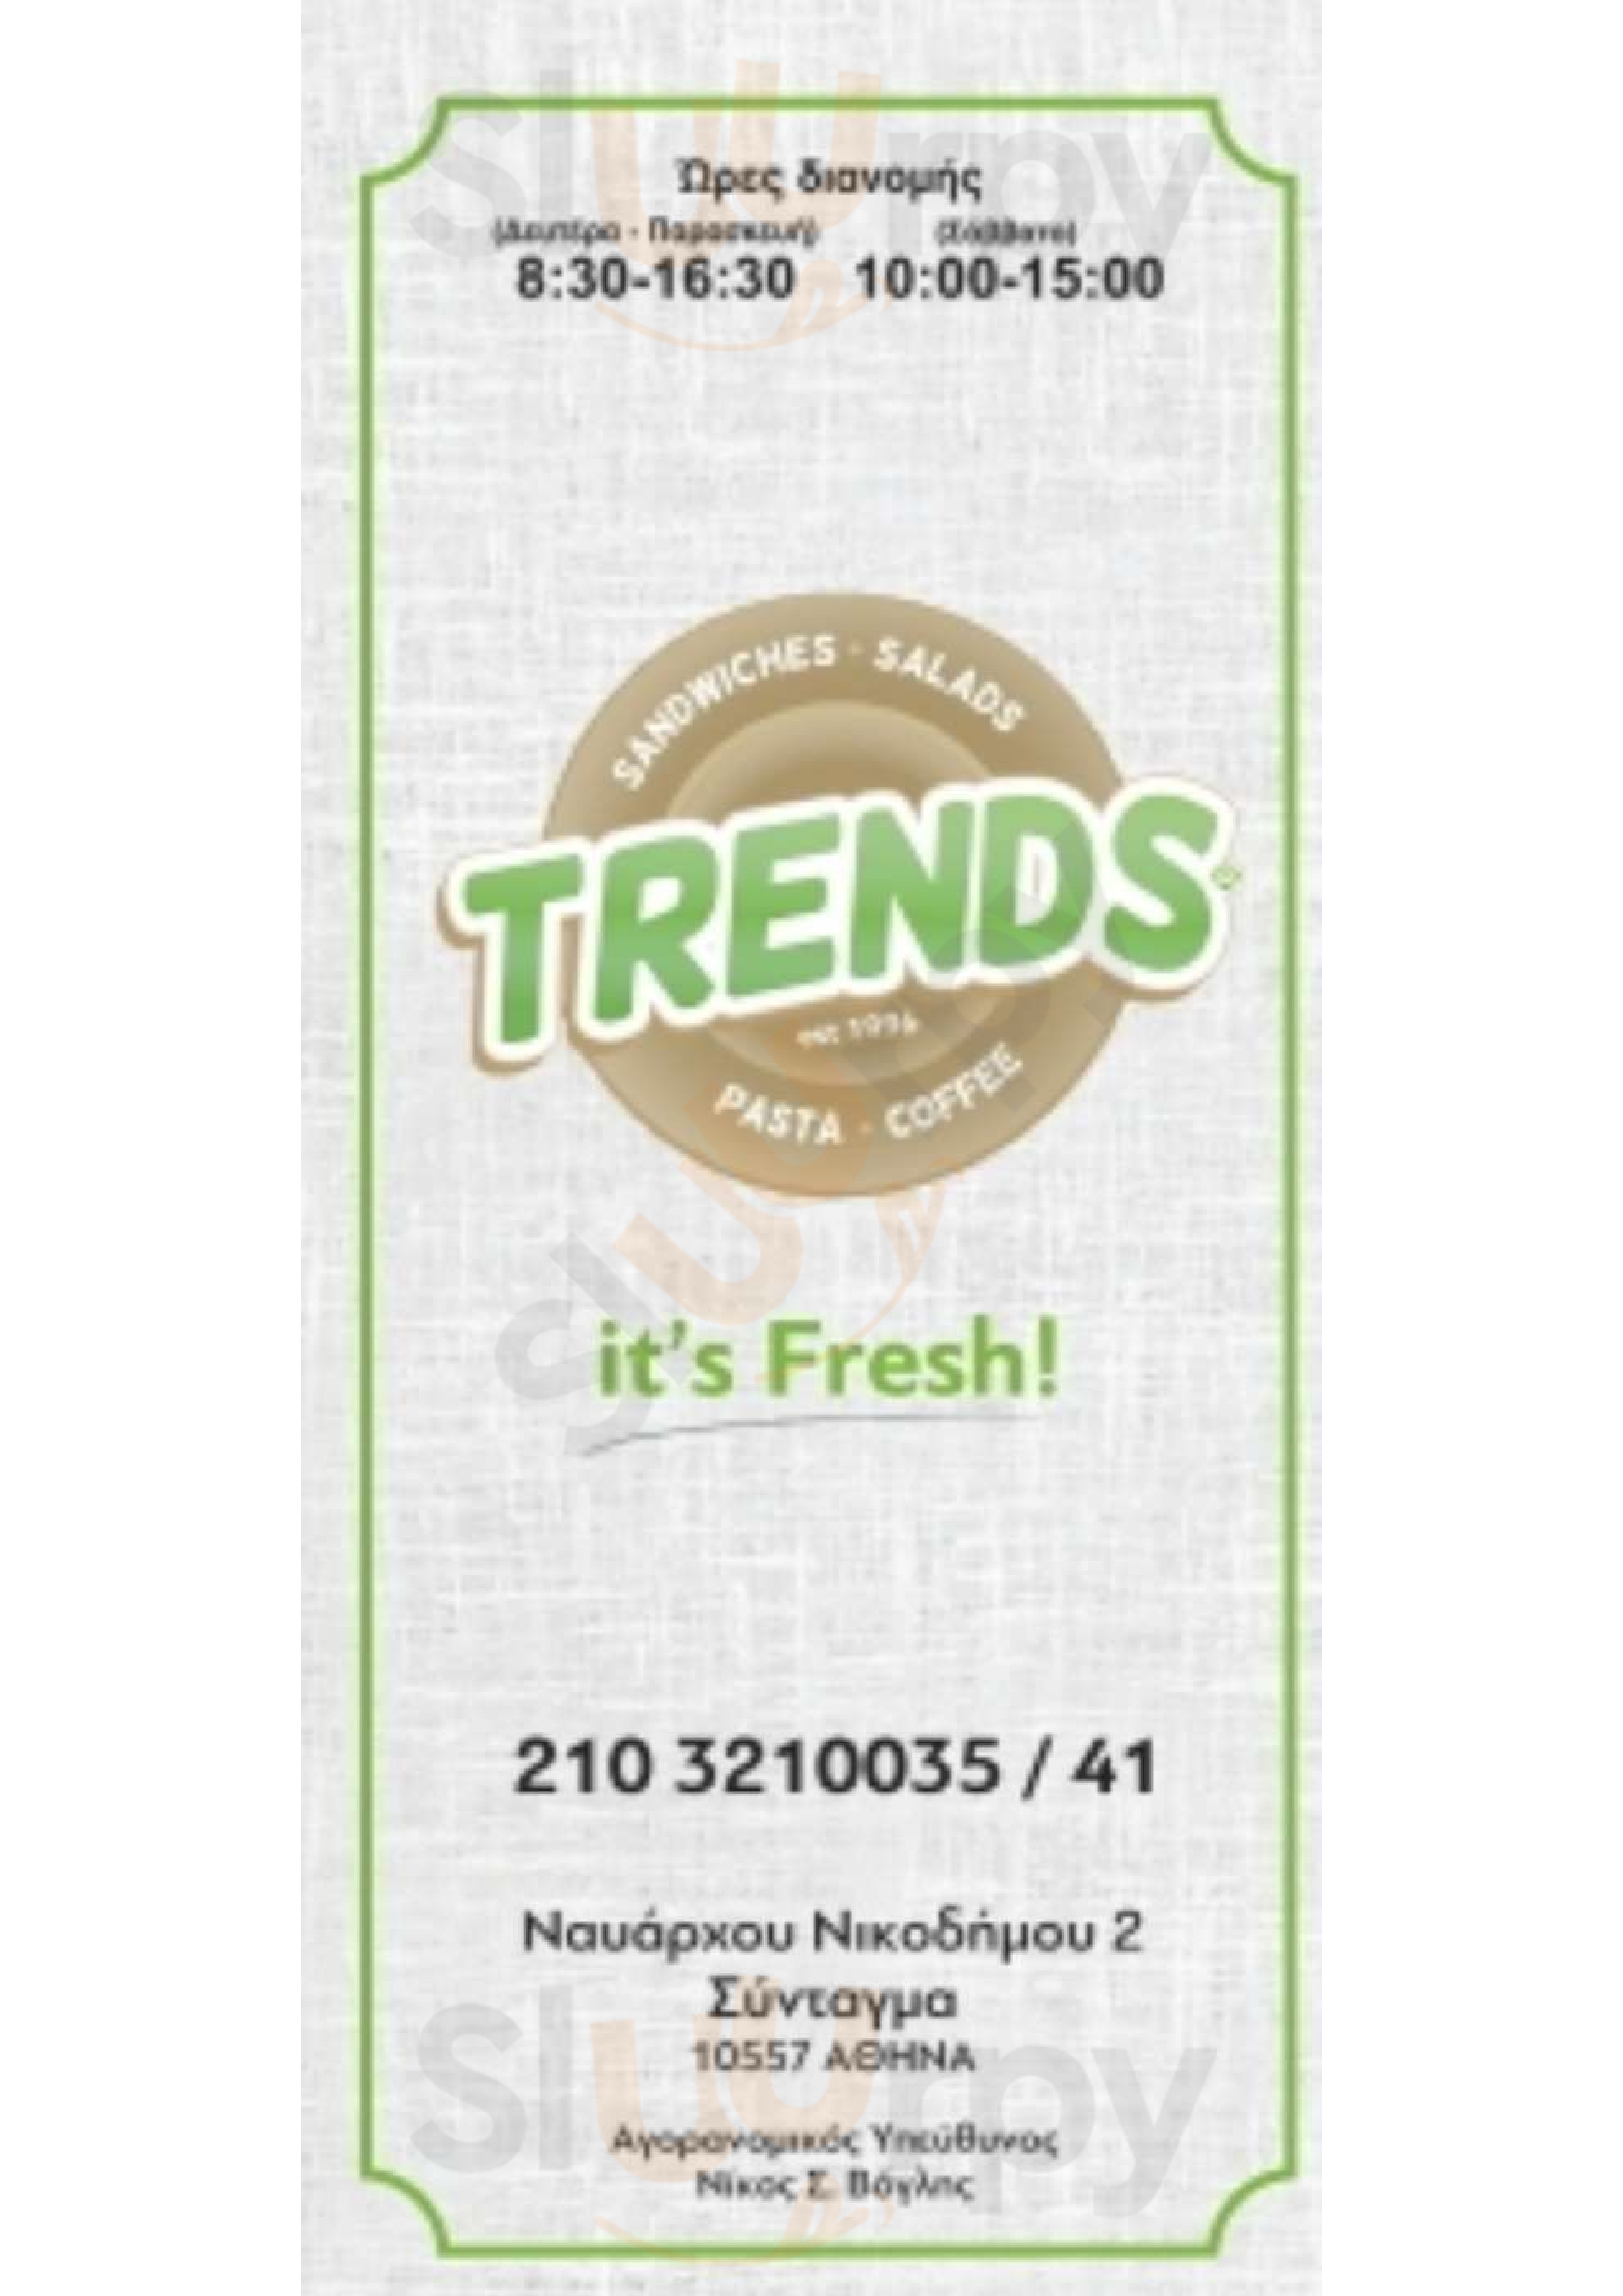 Trends Subs & Salads Αθήνα Menu - 1